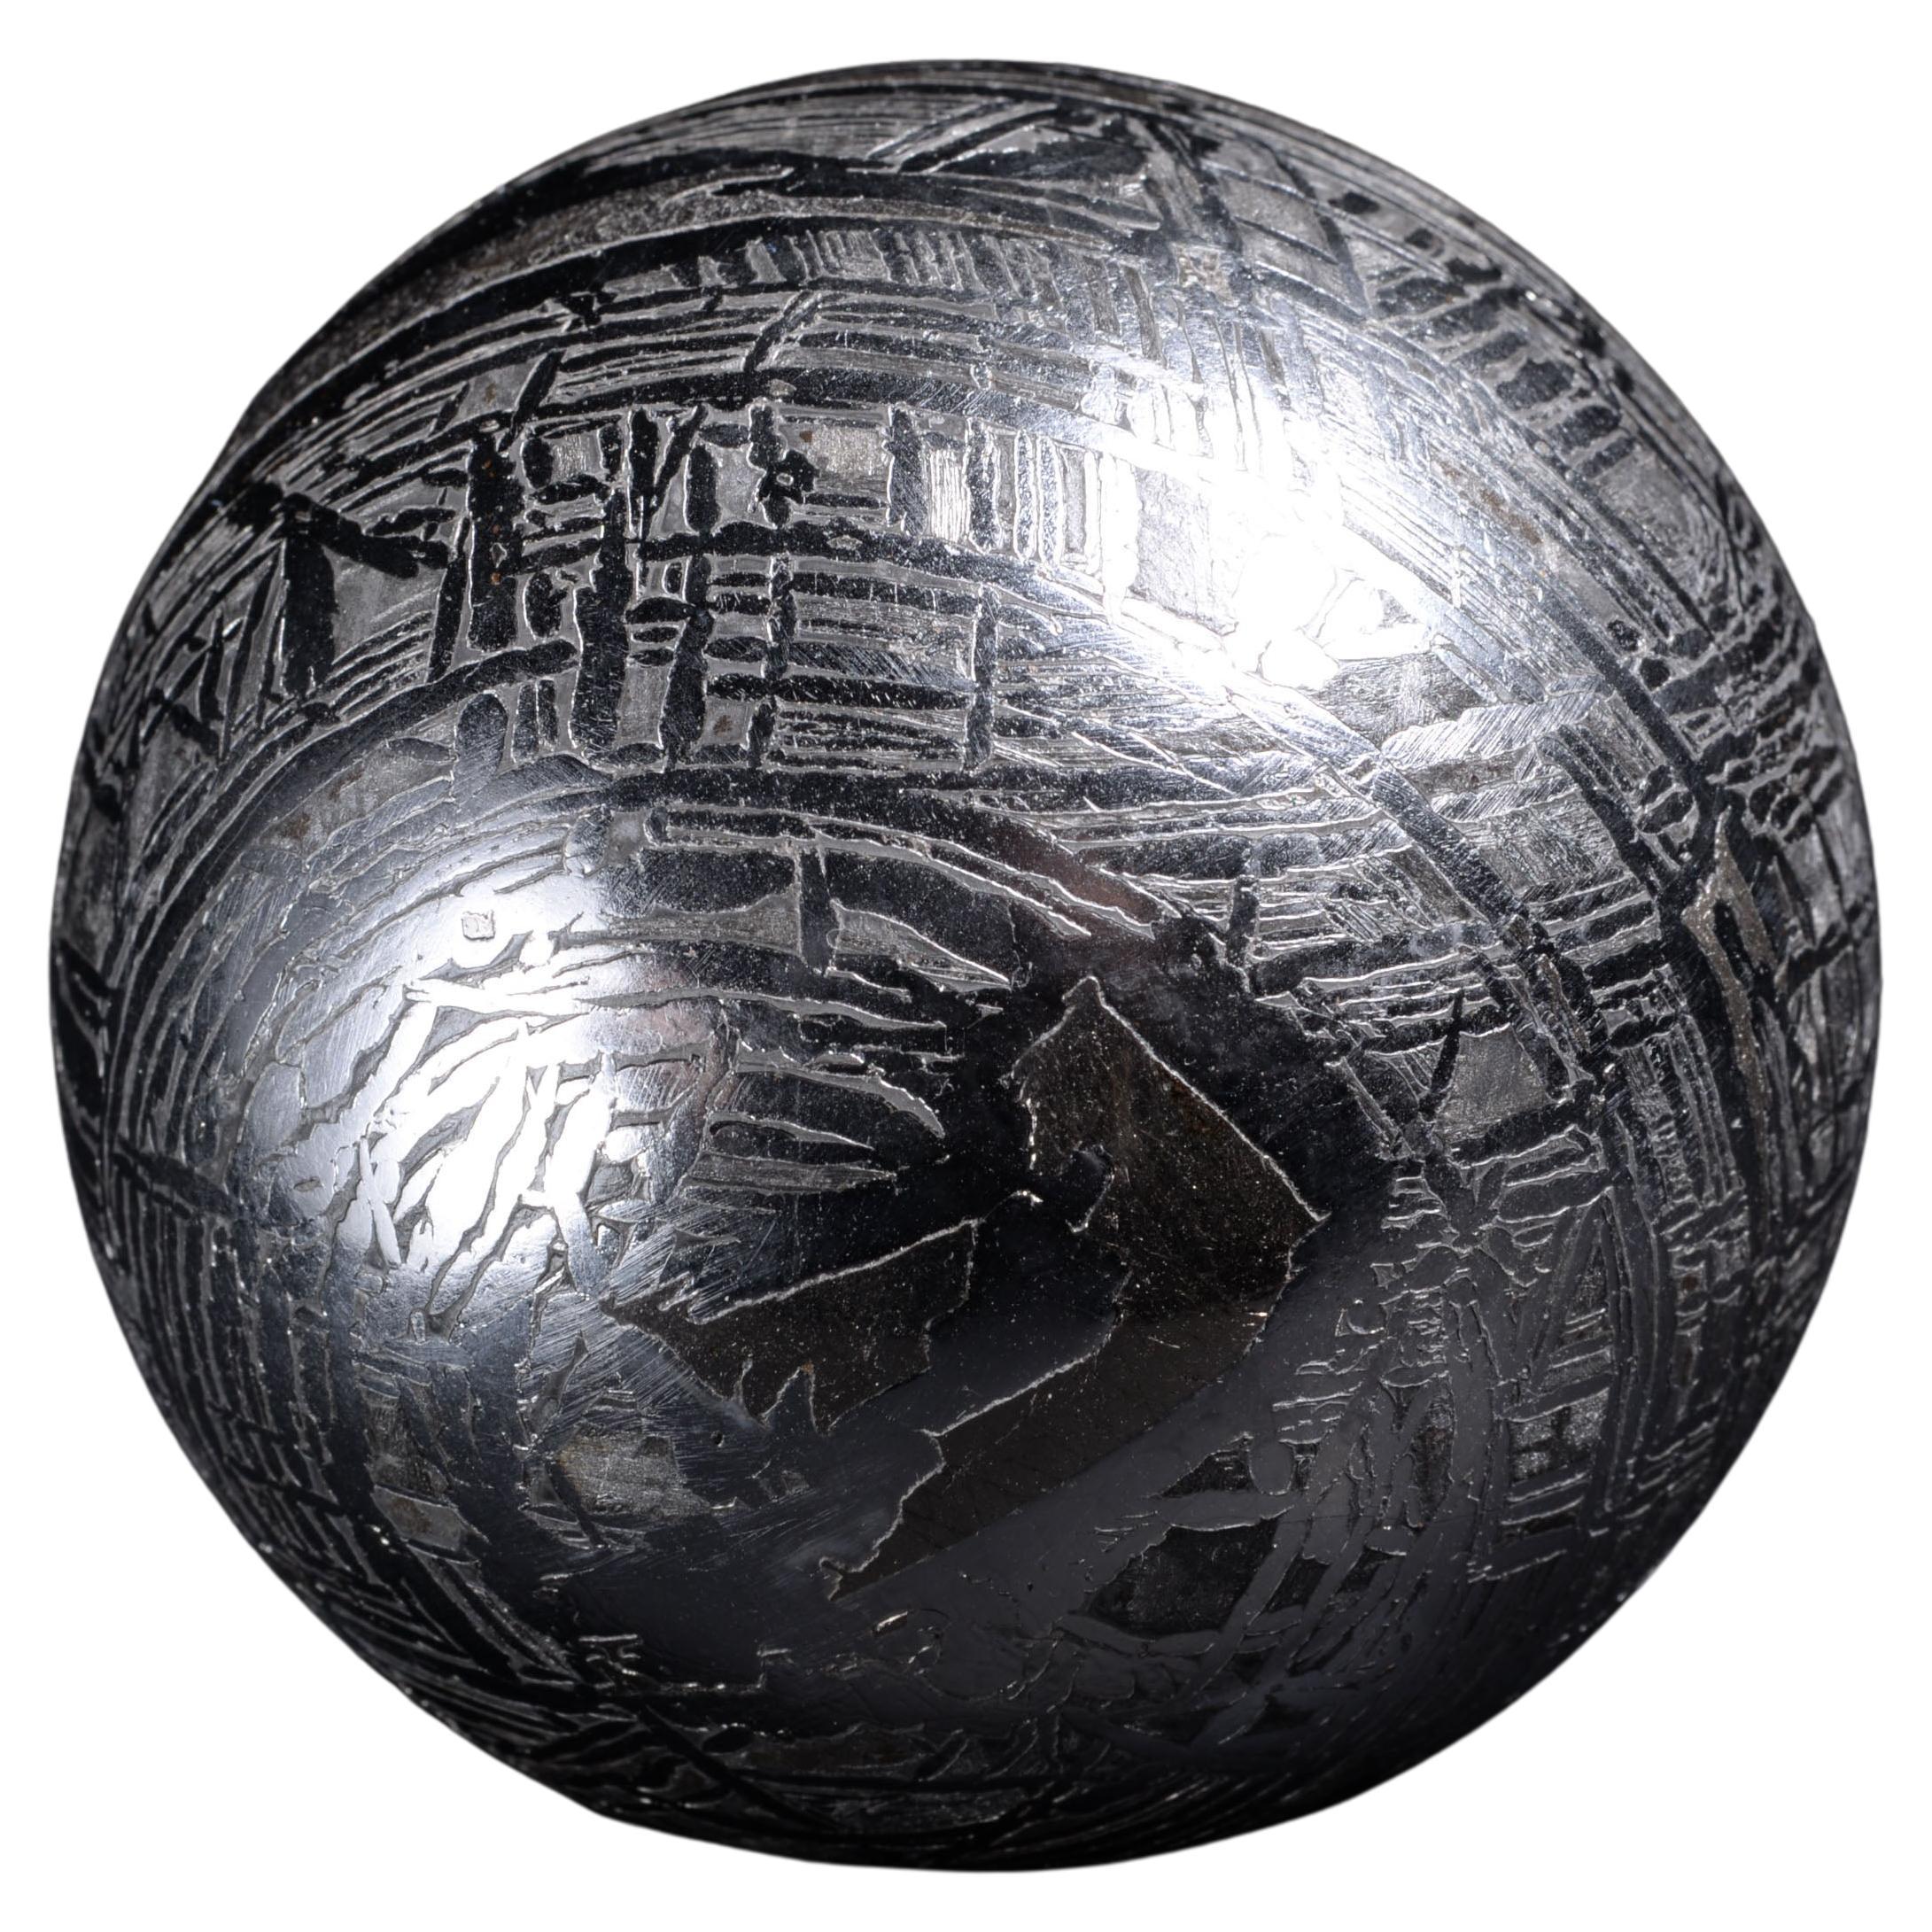 Sphère météorite extraterrestre en fer